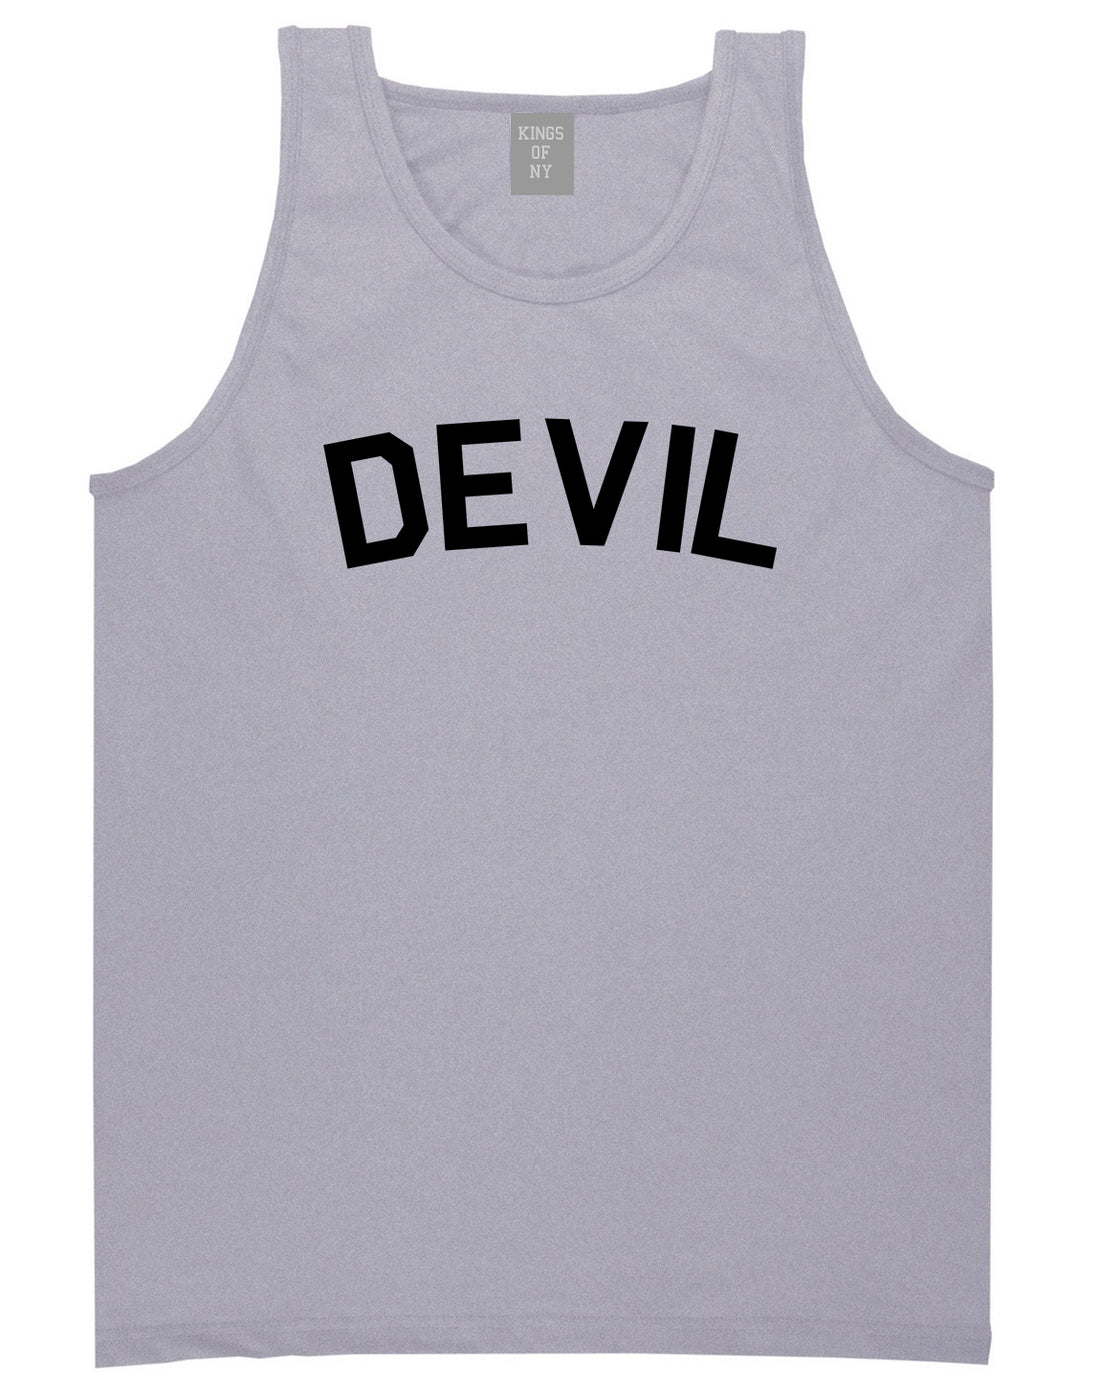 Devil Arch Goth Tank Top Shirt in Grey